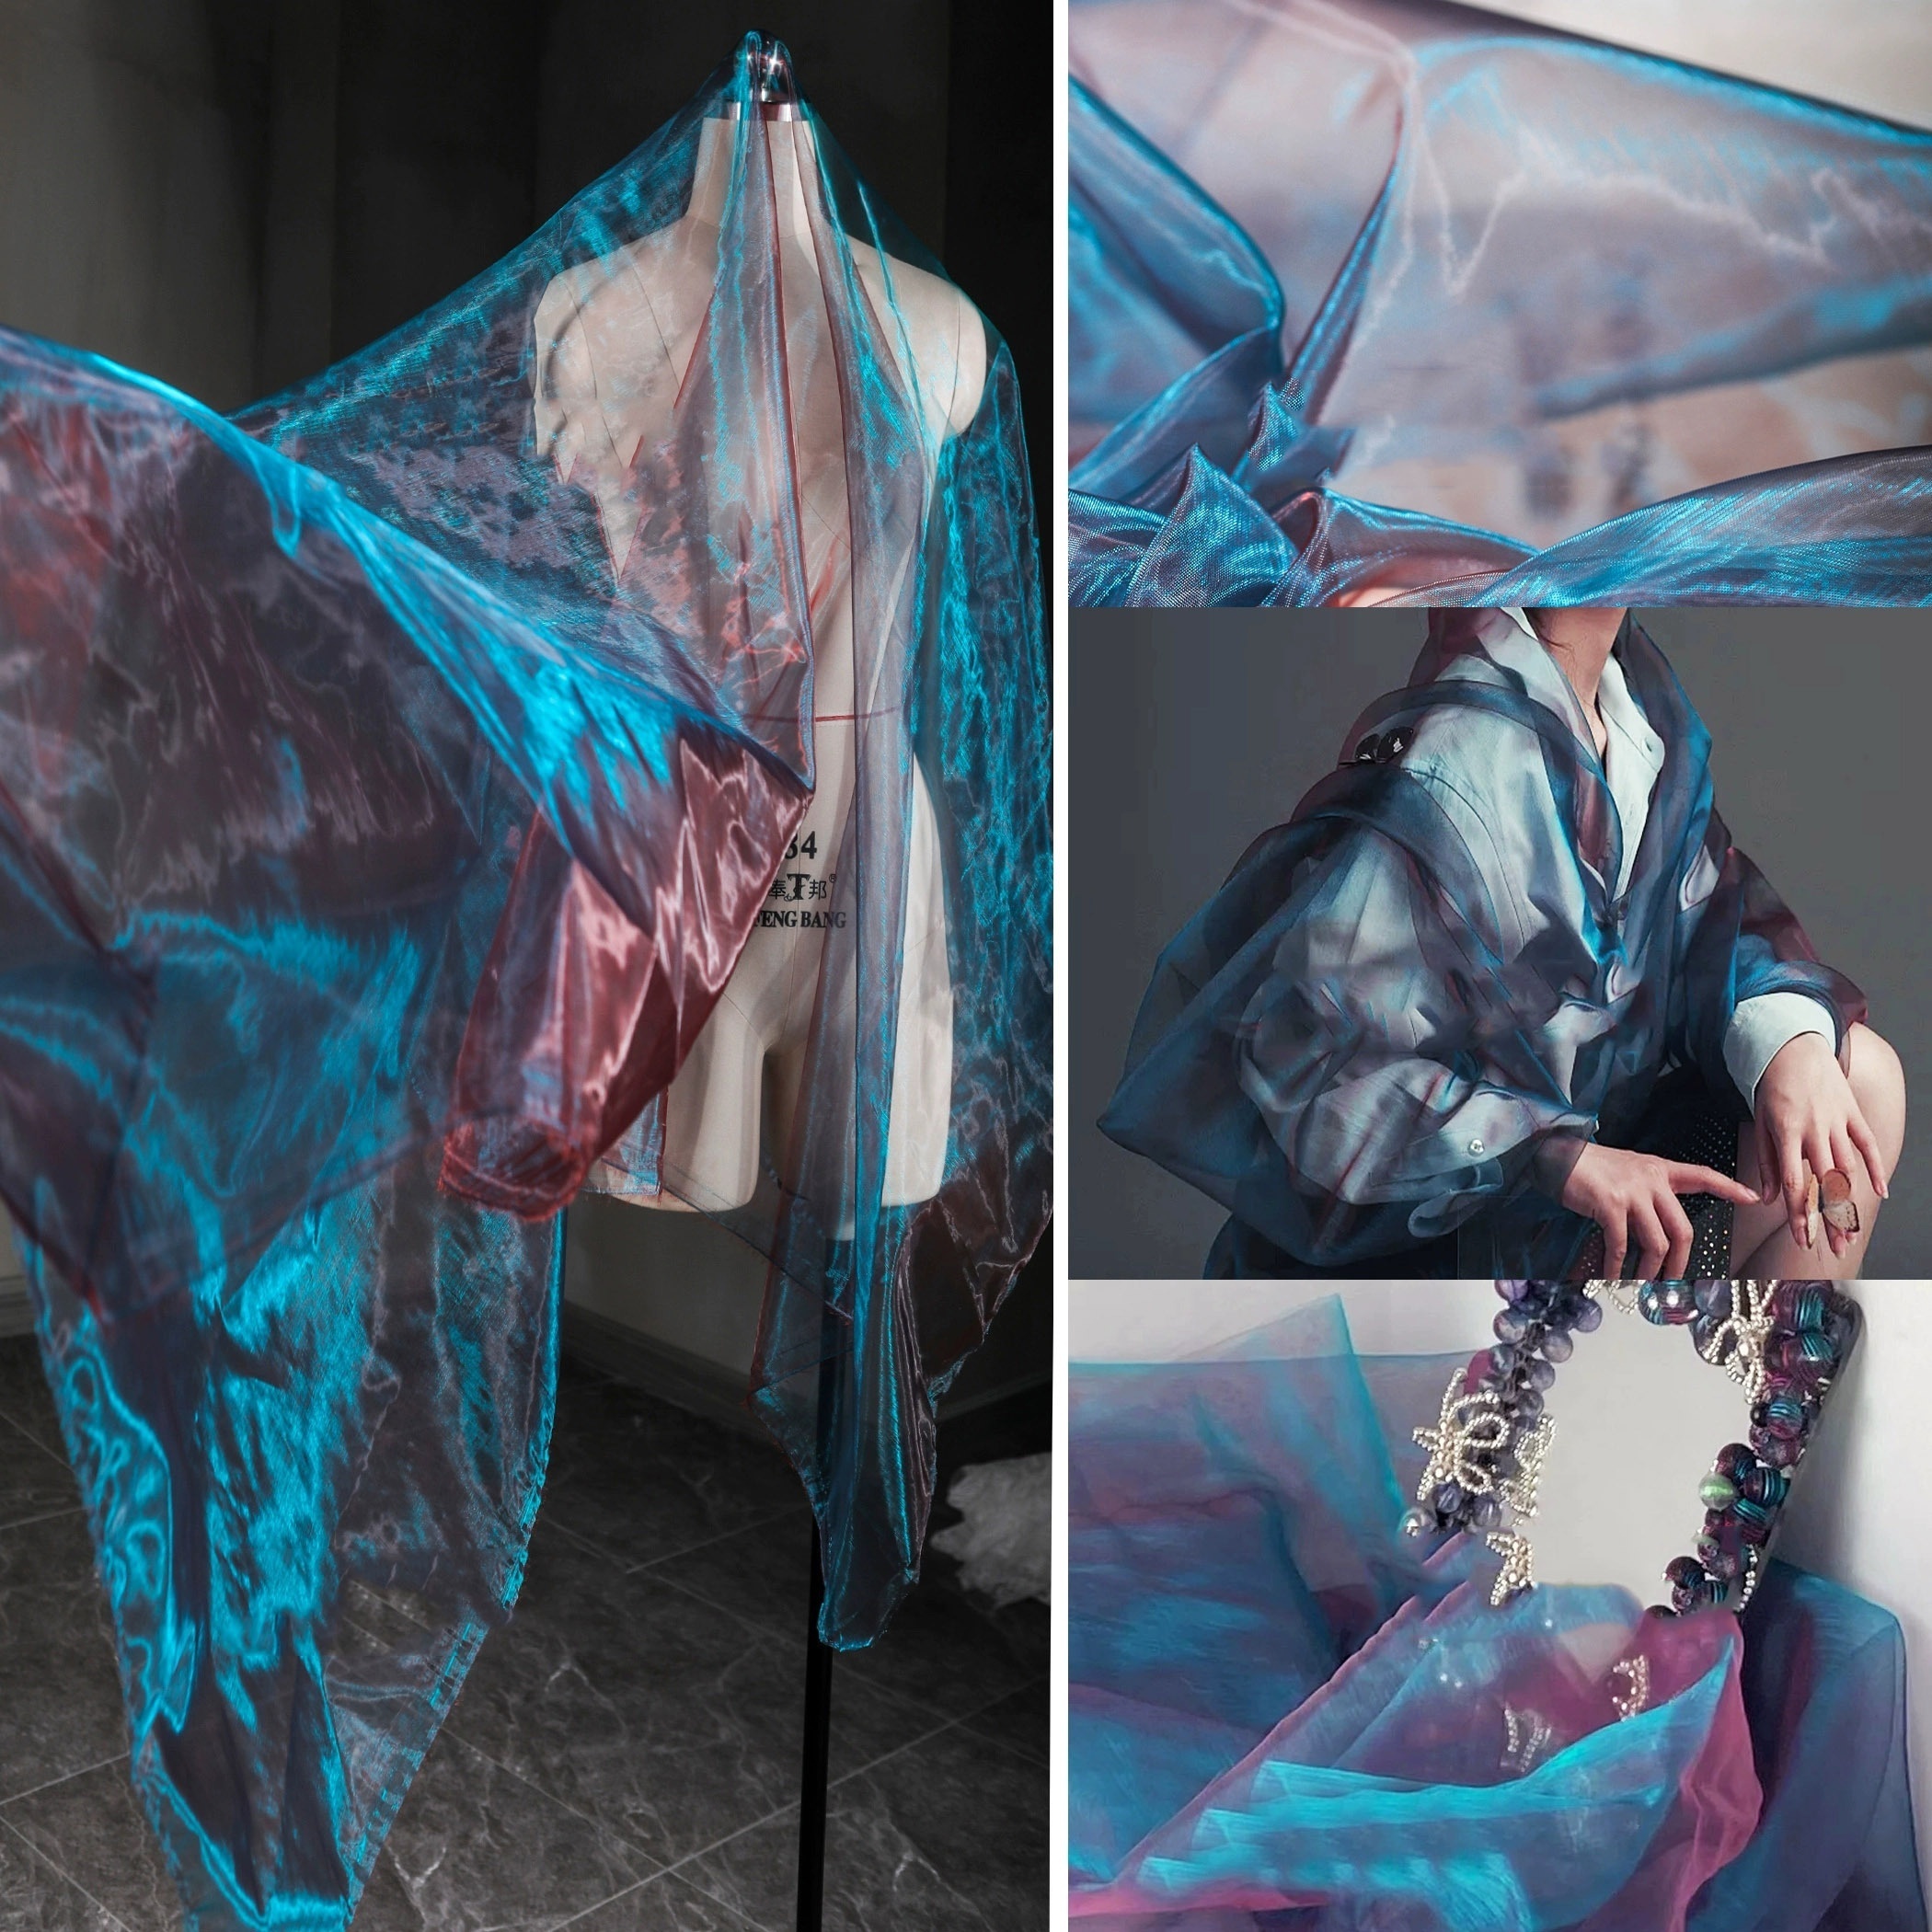 Ocean Blue Floral Fil Coupe Burnout Jacquard Organza Fabric Made